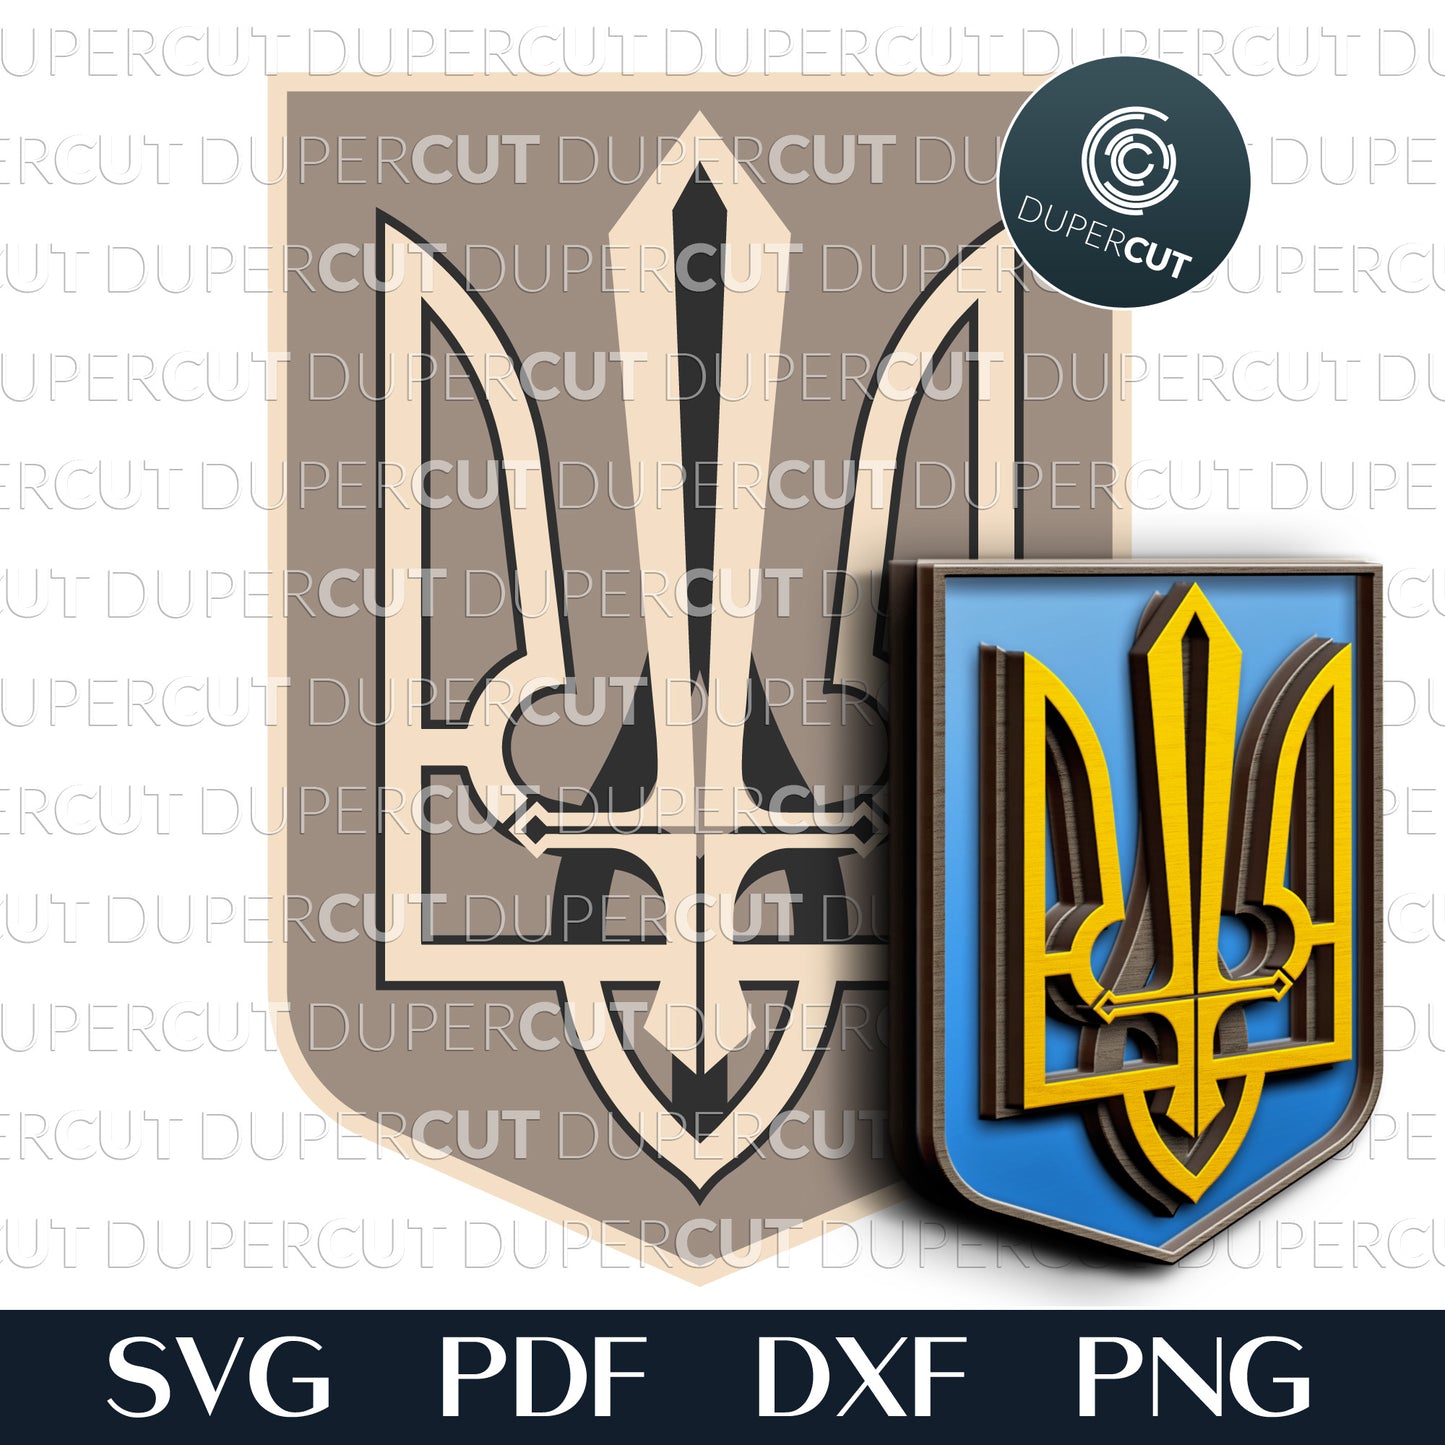 Ukrainian Trident Coat of Arms of Ukraine - SVG PDF DXF layered laser cutting files for Glowforge, Cricut, Silhouette, CNC plasma laser cutting machines by DuperCut